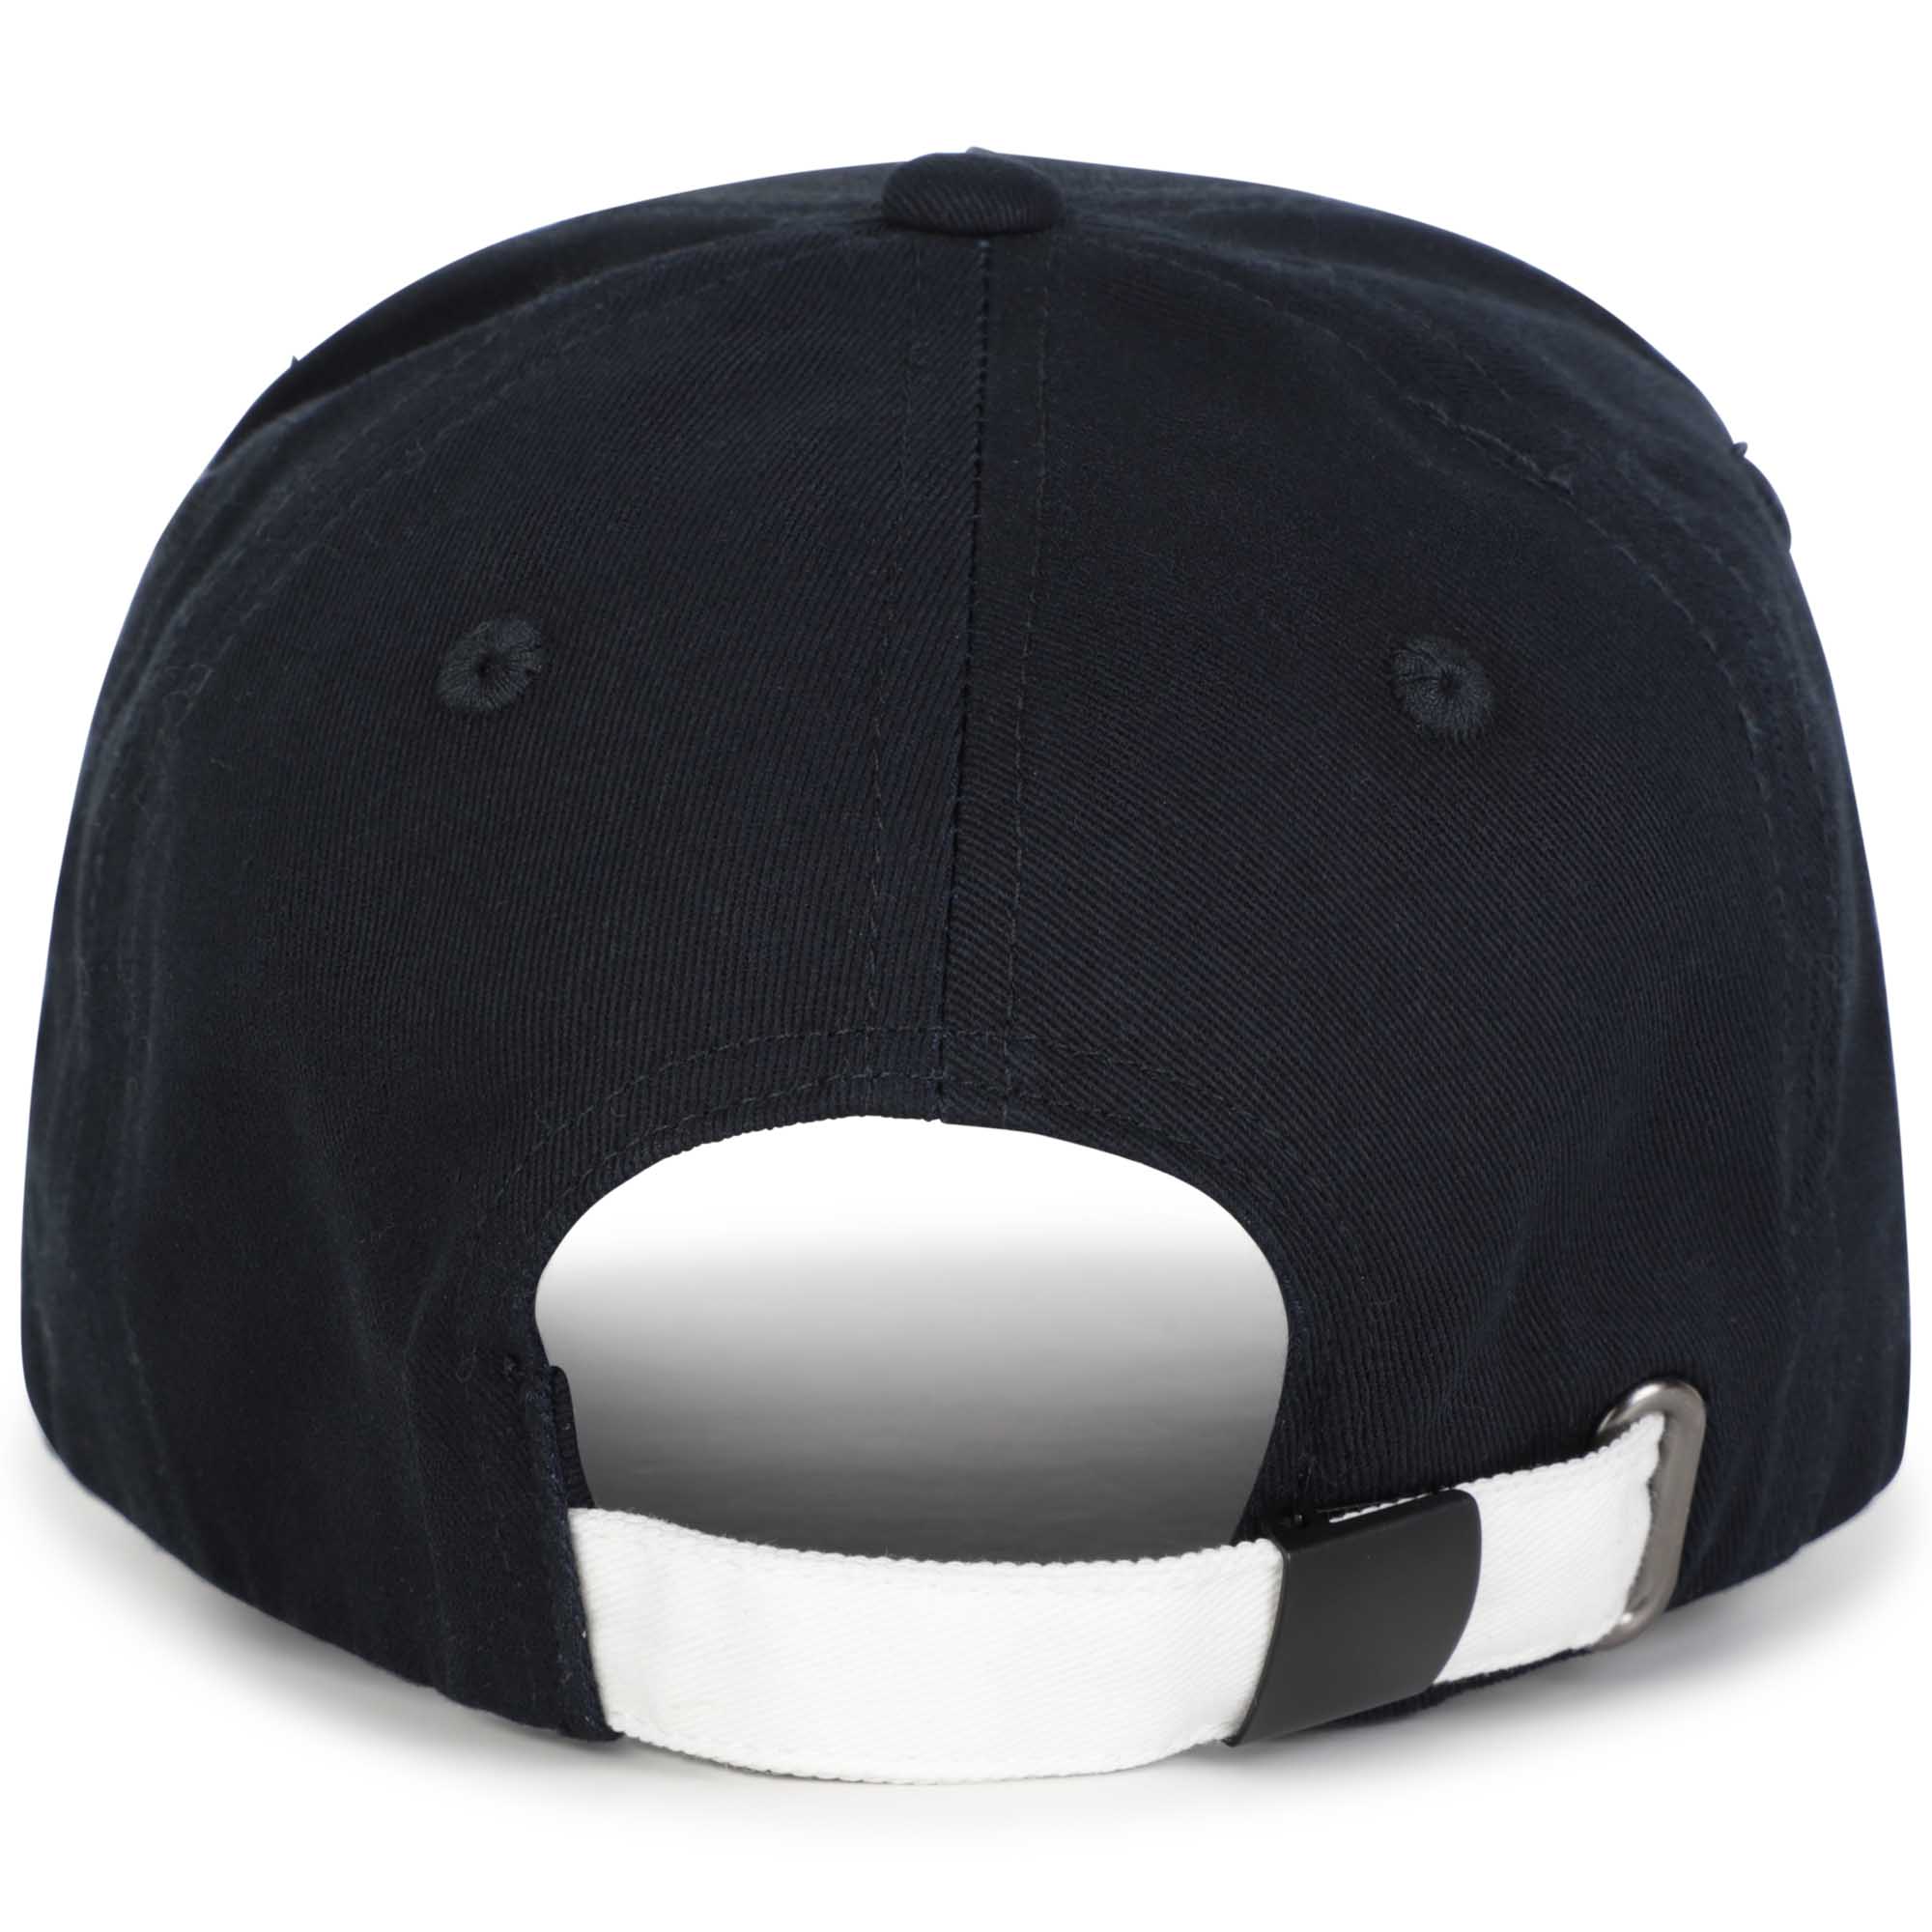 Baseball cap with raised logo AIGLE for UNISEX